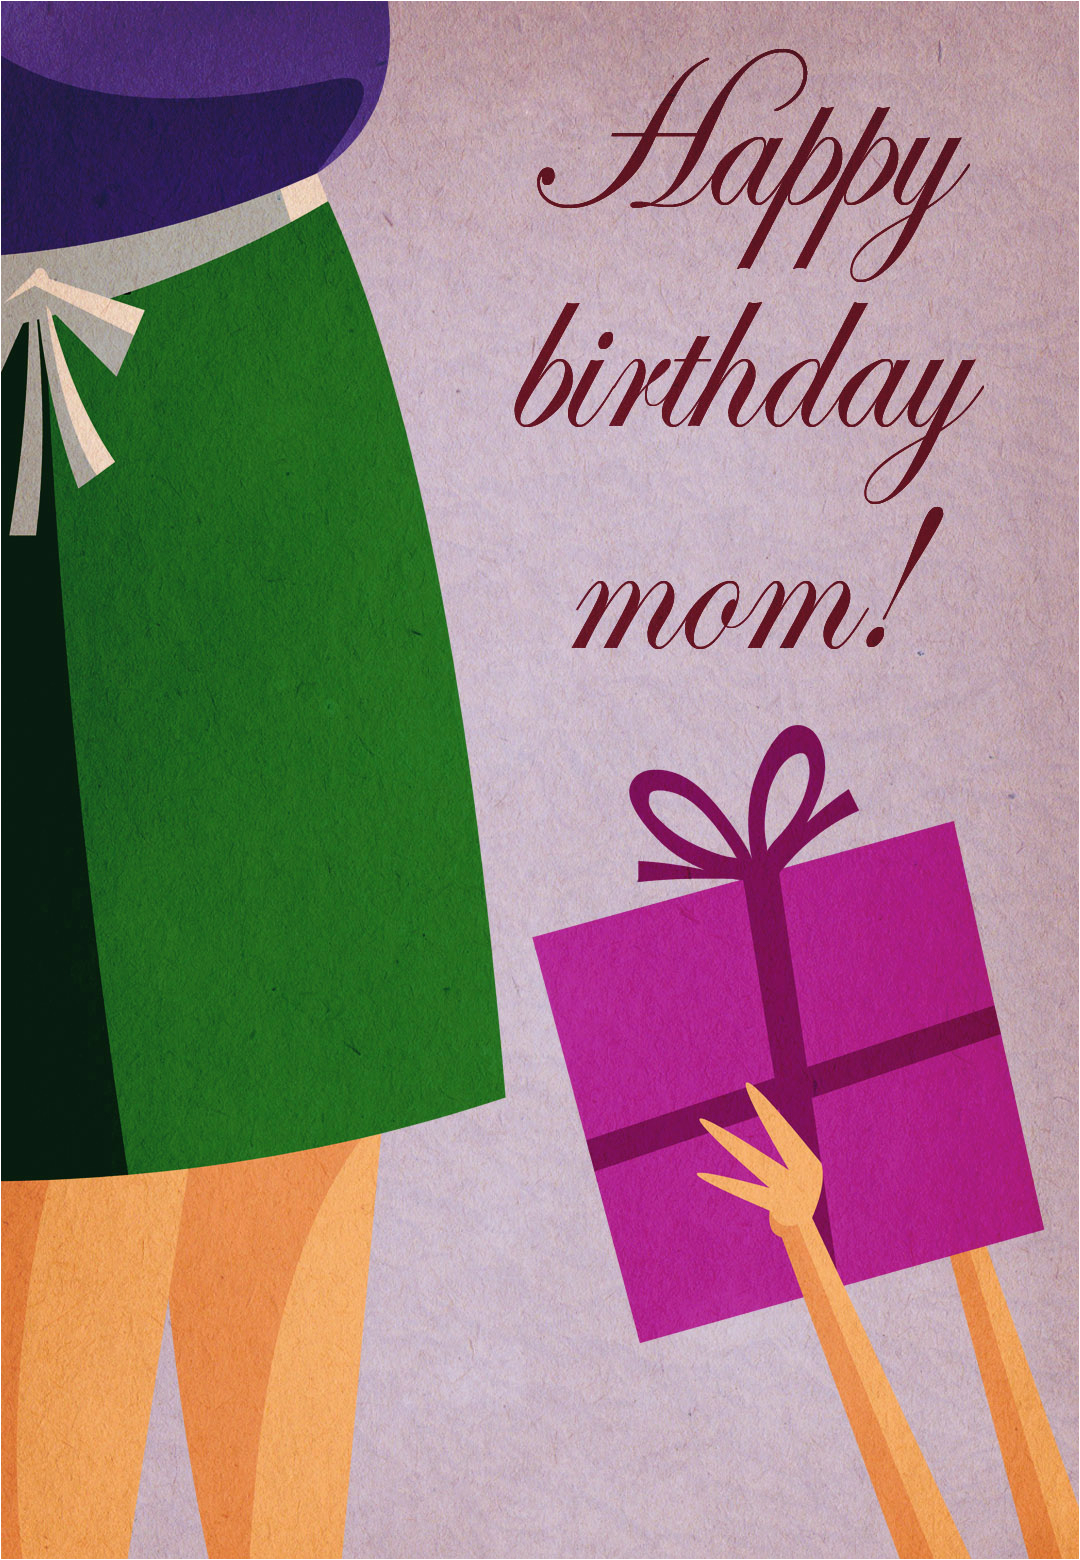 happy birthday mom free birthday card greetings island